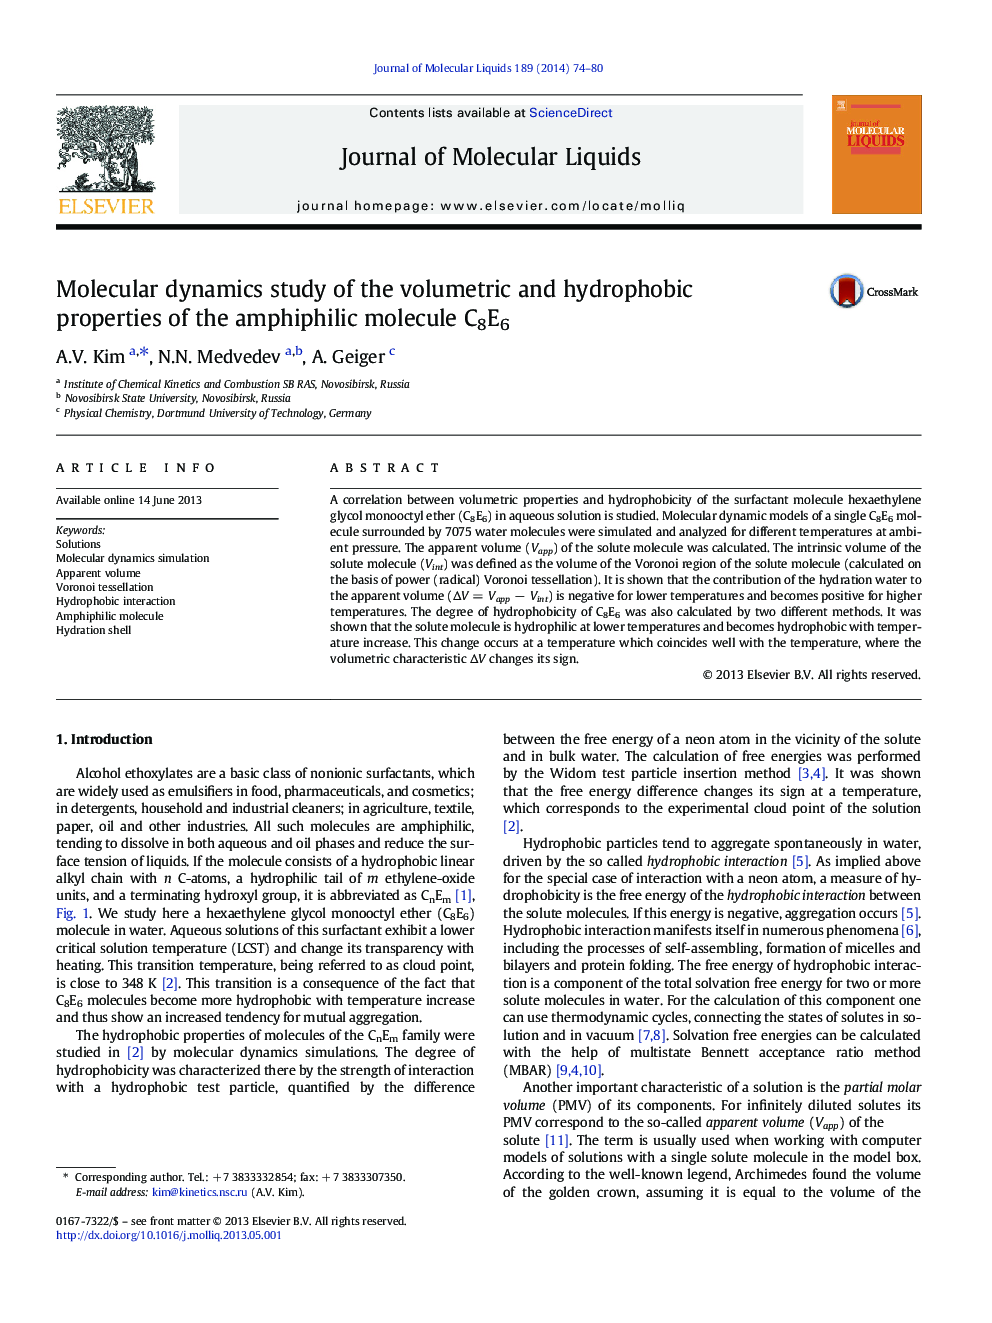 Molecular dynamics study of the volumetric and hydrophobic properties of the amphiphilic molecule C8E6